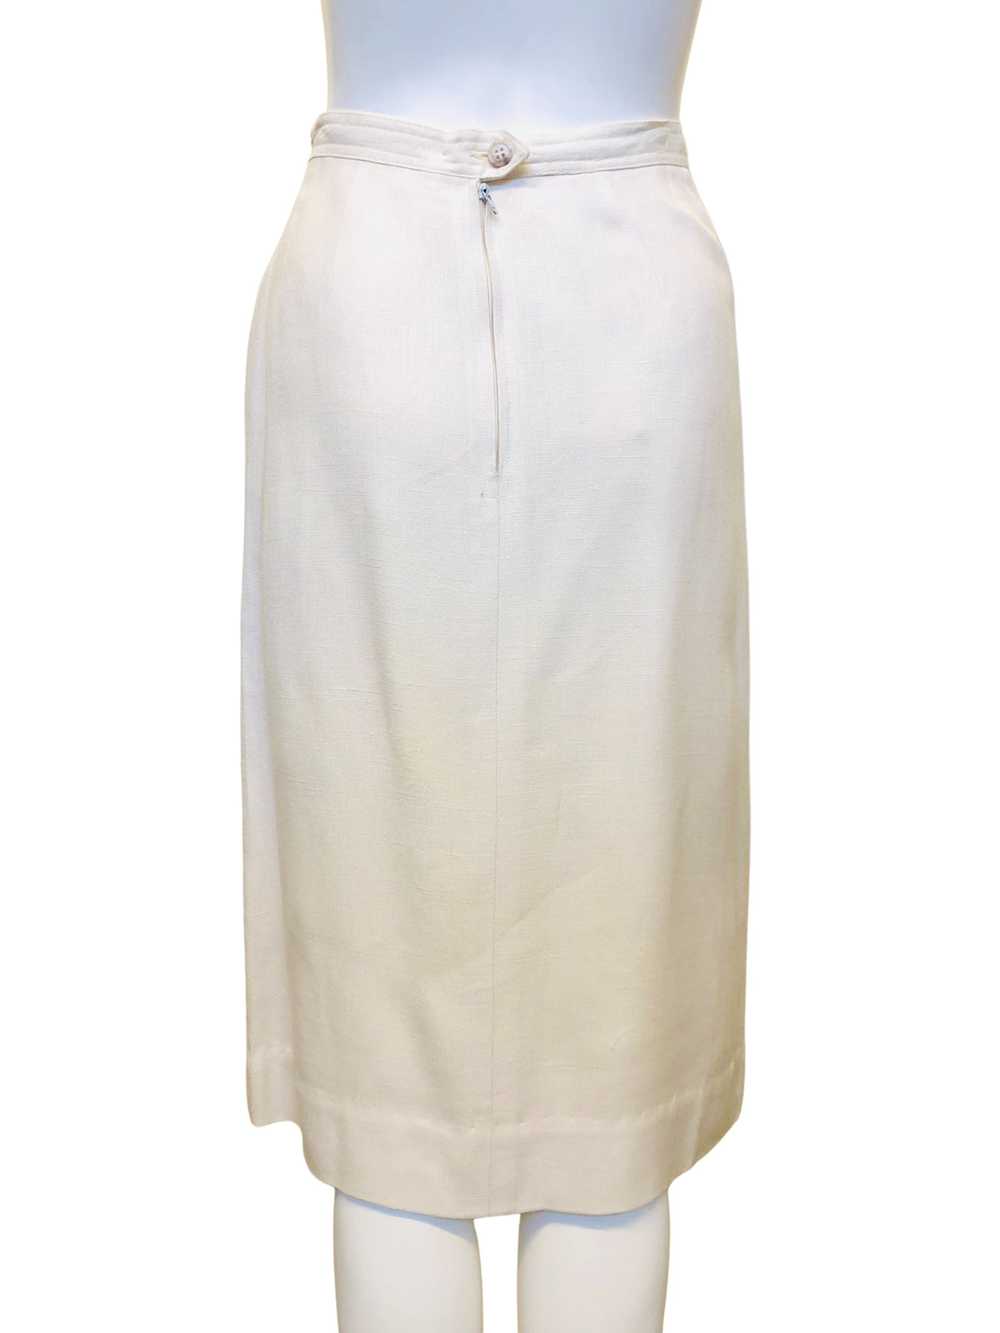 1980's Ivory Pencil Skirt w/Side Slit - image 3